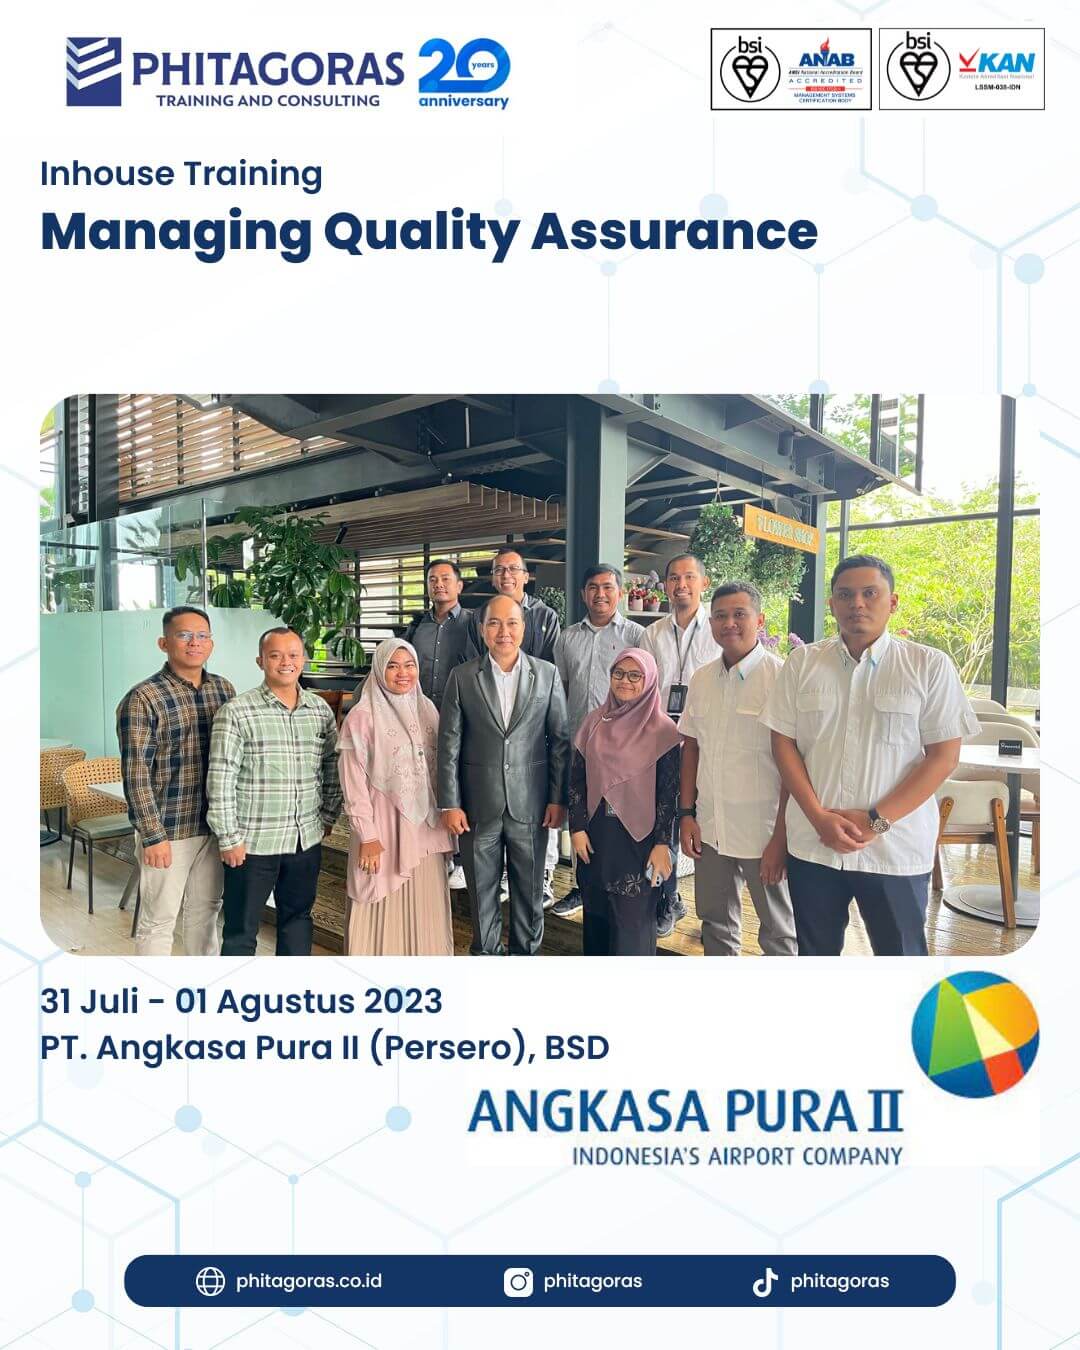 Inhouse Training Managing Quality Assurance - PT. Angkasa Pura II (Persero)